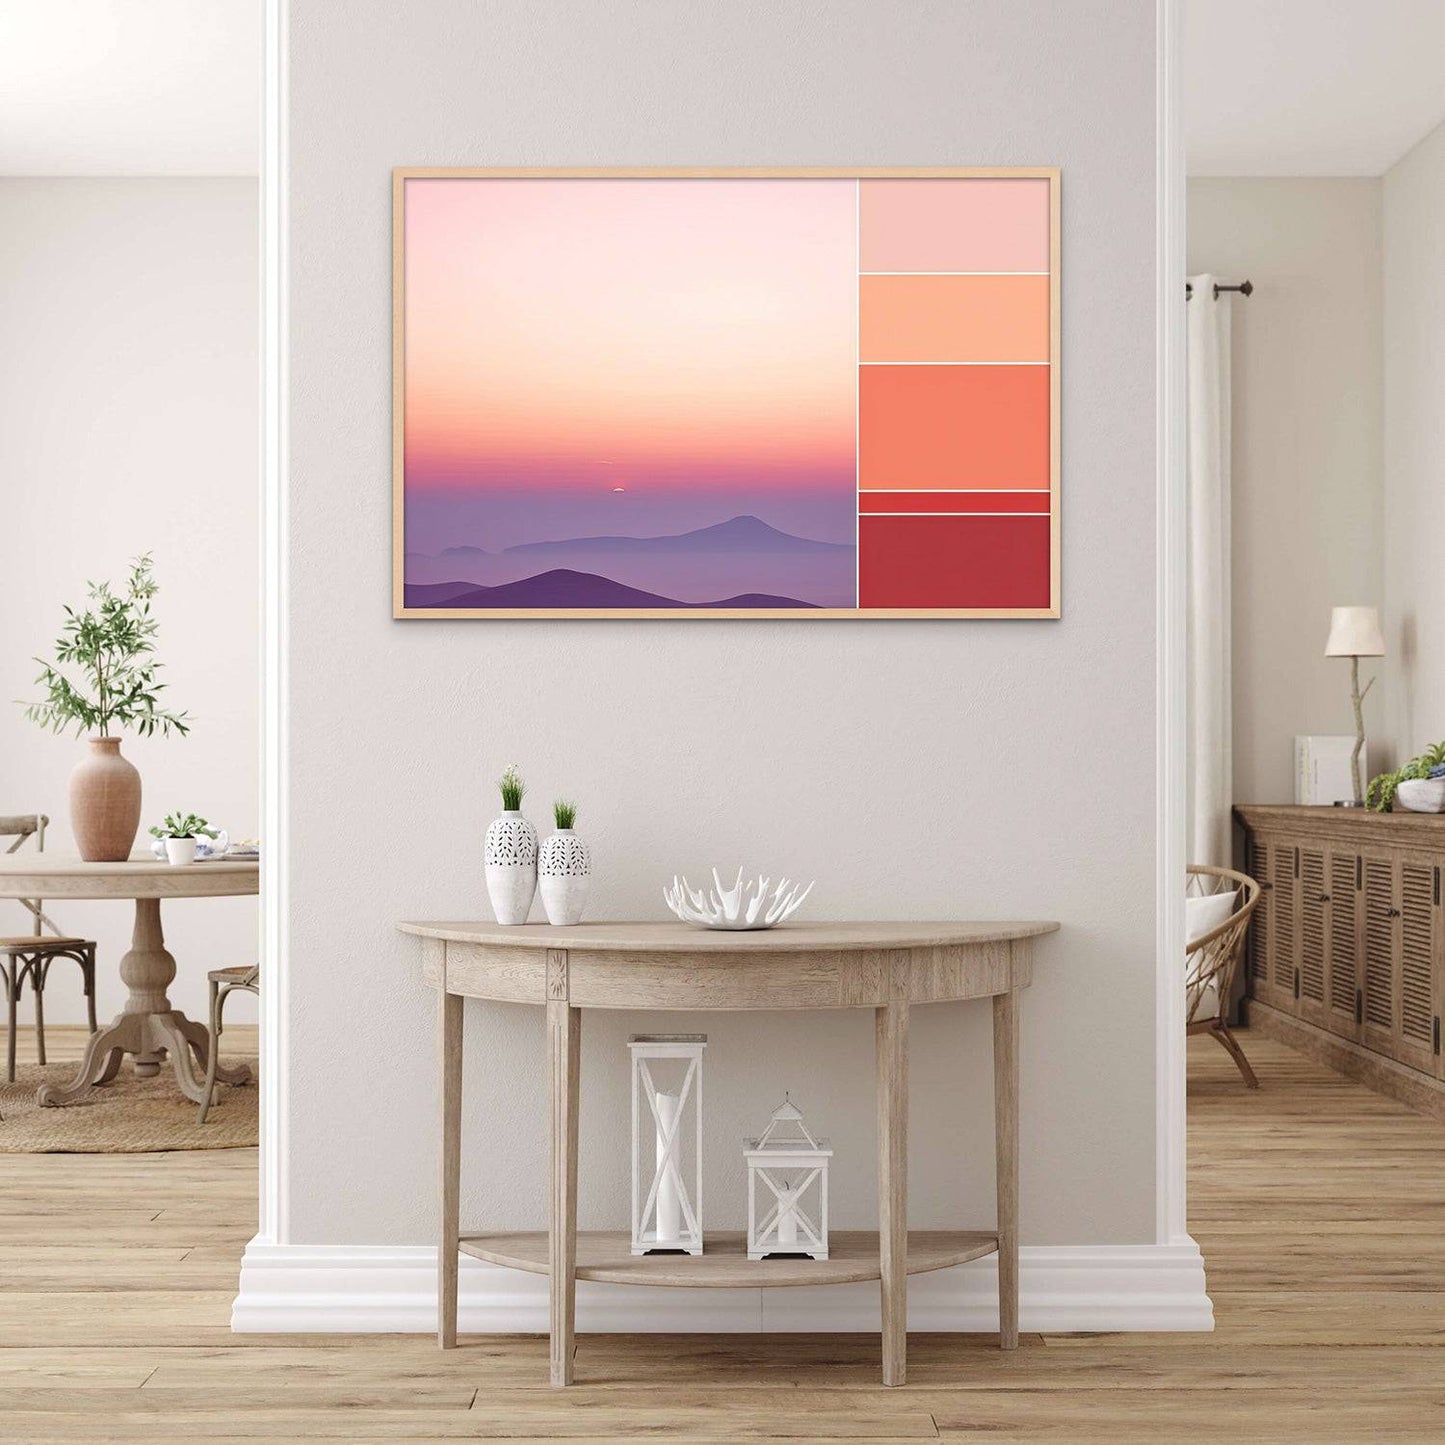 Sunset Odyssey  #948261 - Pixel Gallery